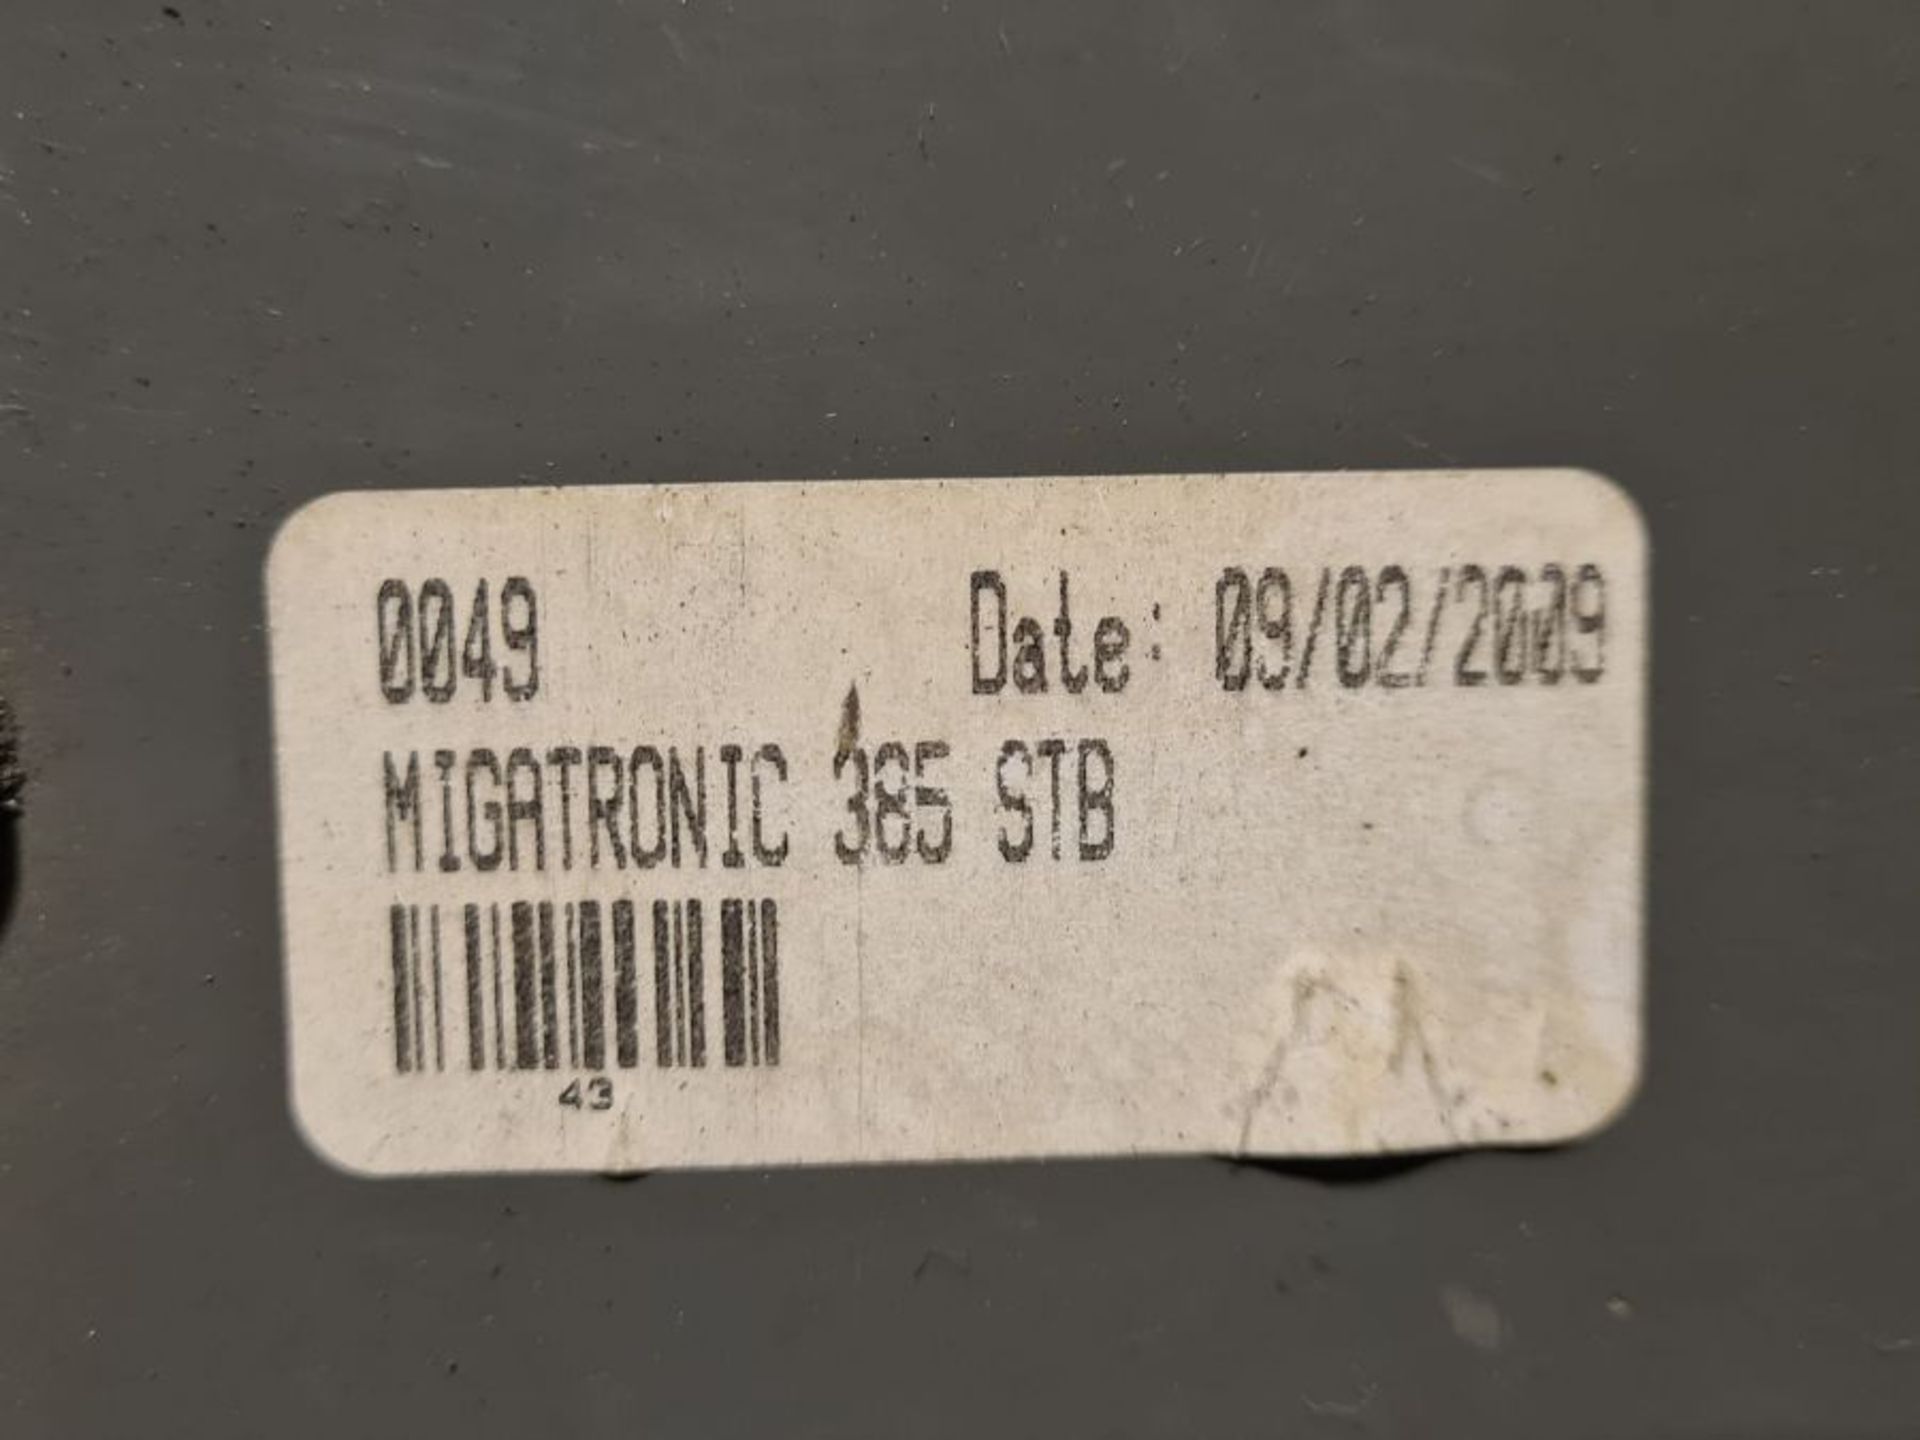 Migatronic MIG385 welding machine. - Image 4 of 6